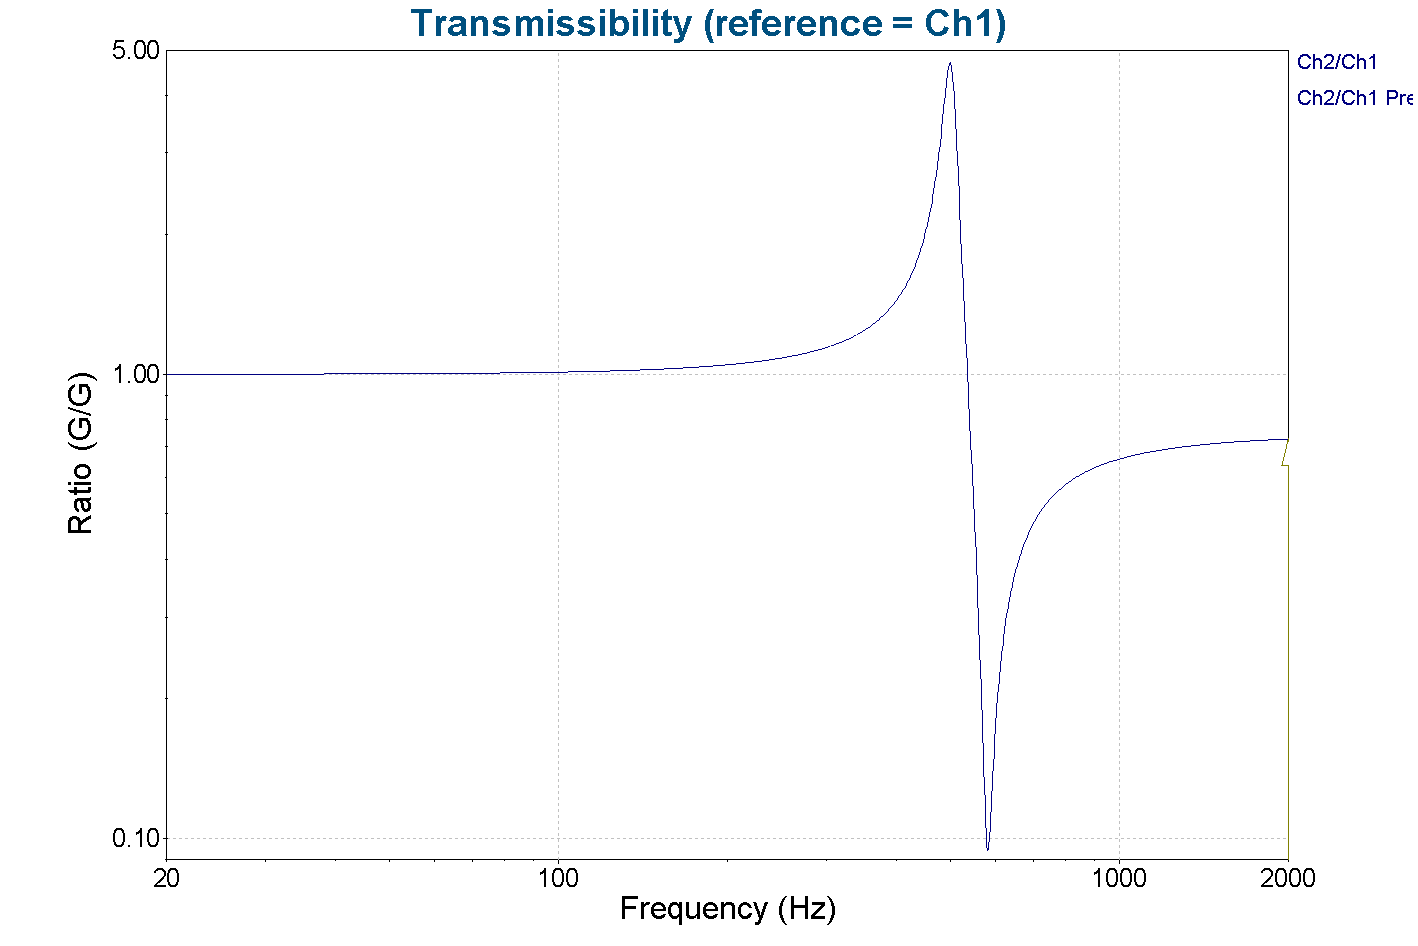 Simple sine test transmissibility profile